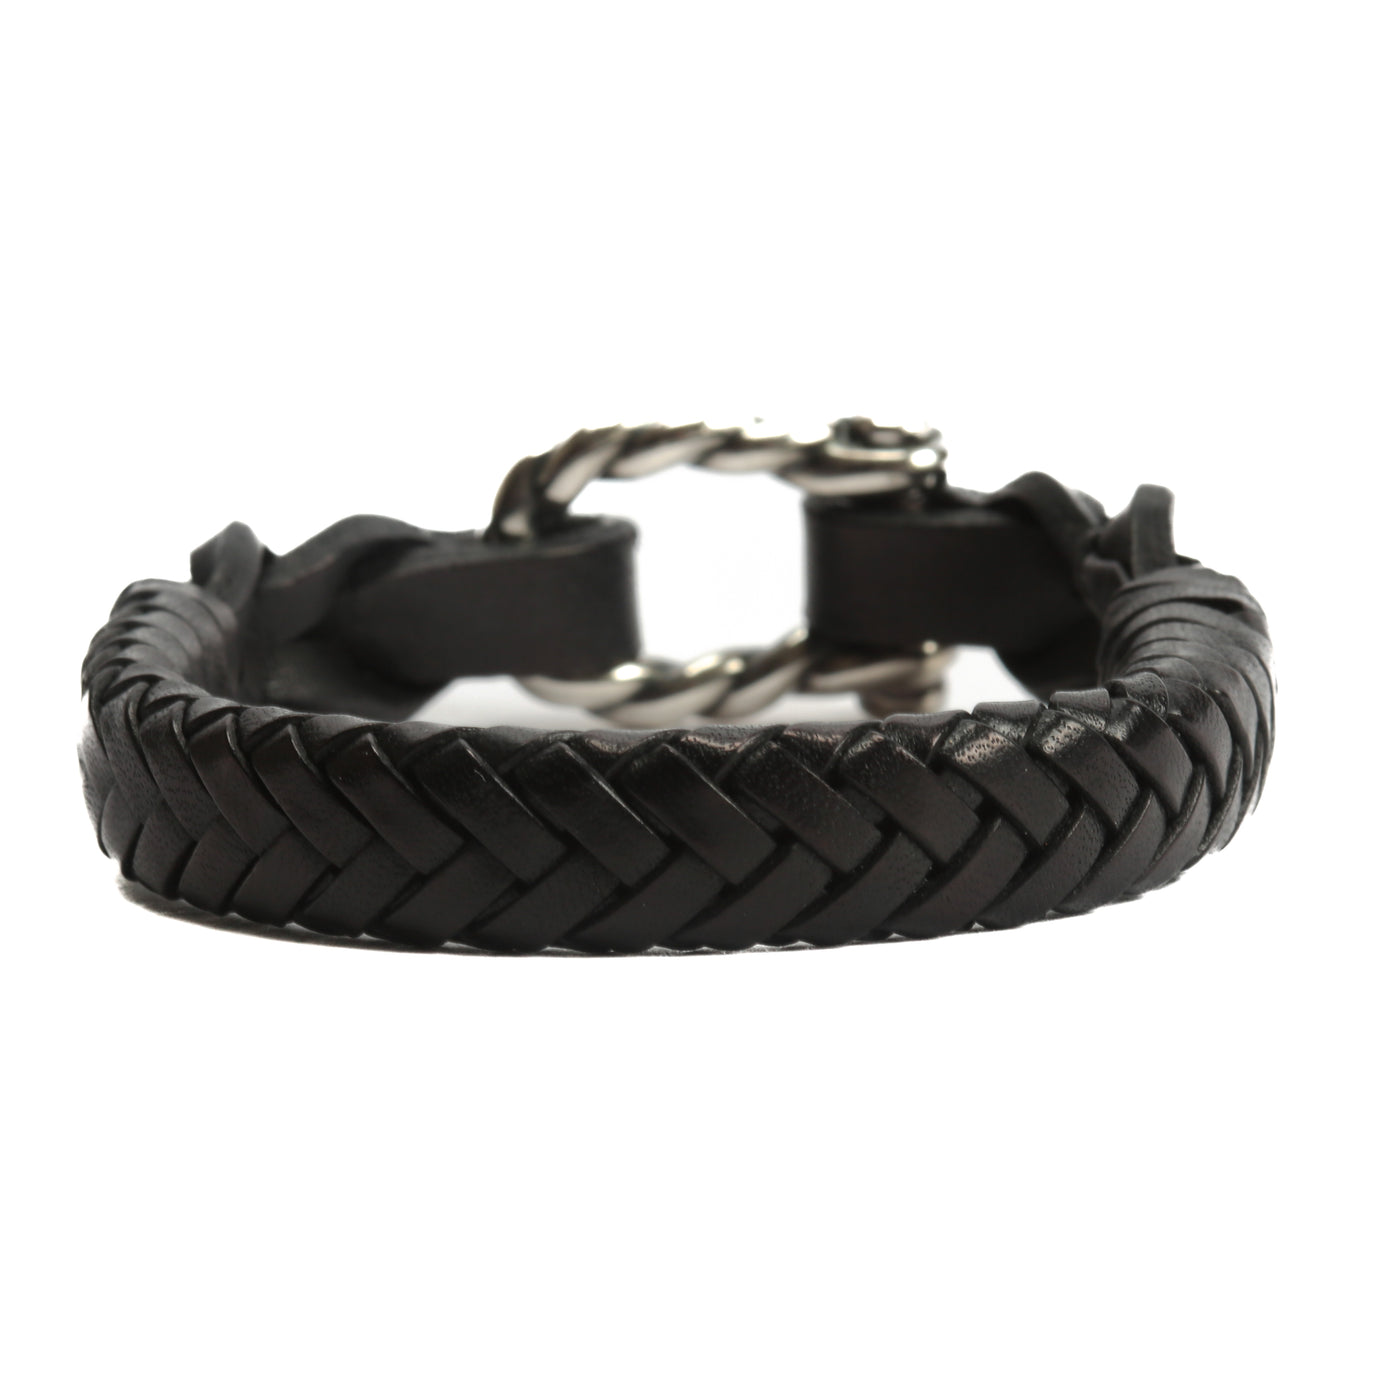 DAVID YURMAN Black Leather Bracelet and Cable Clasp - FINAL SALE